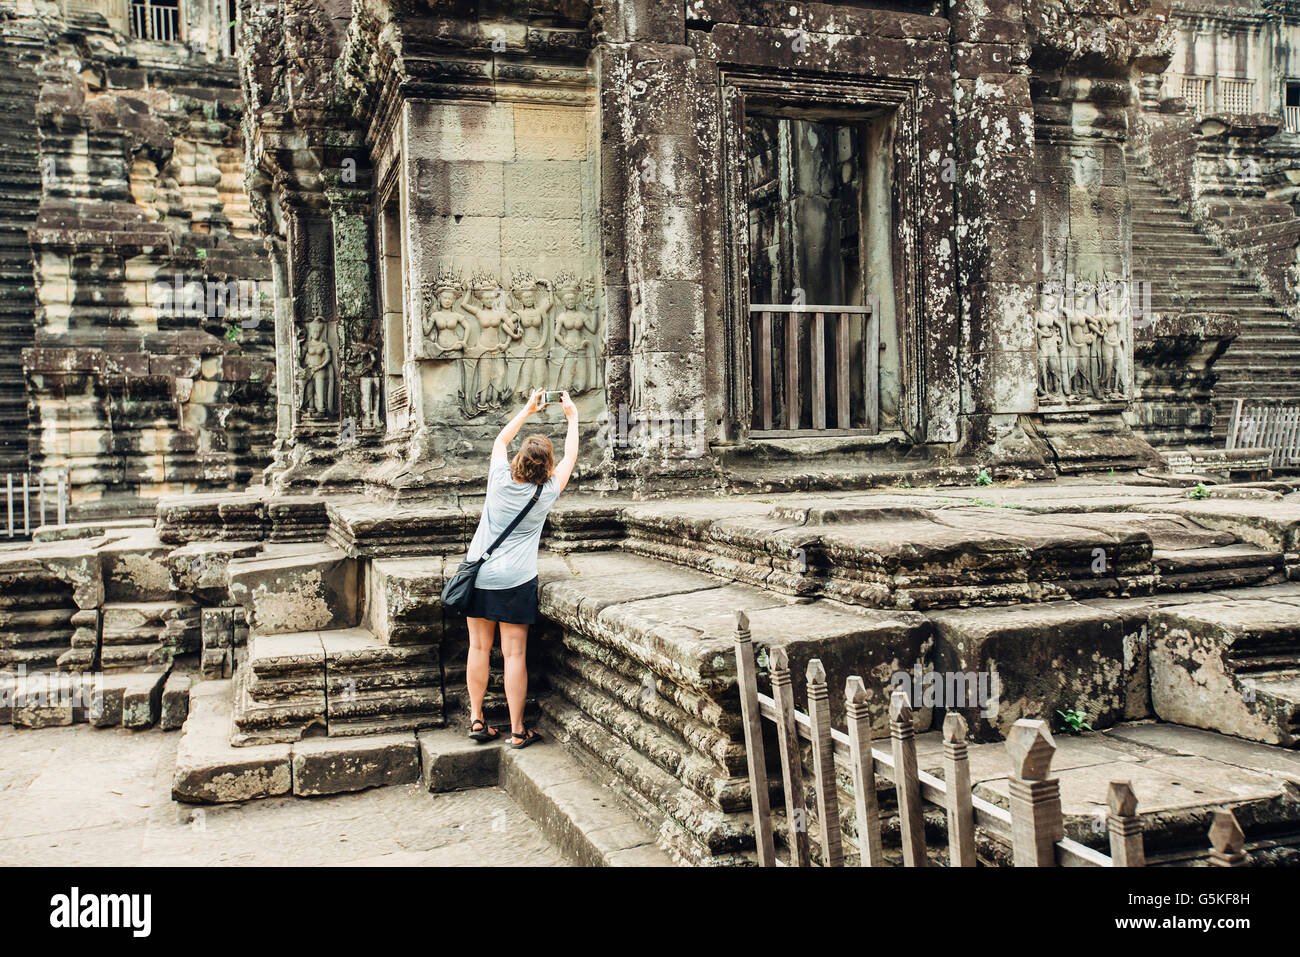 Caucasian tourist photographing Angkor Wat ruins, Siem Reap, Cambodia Stock Photo